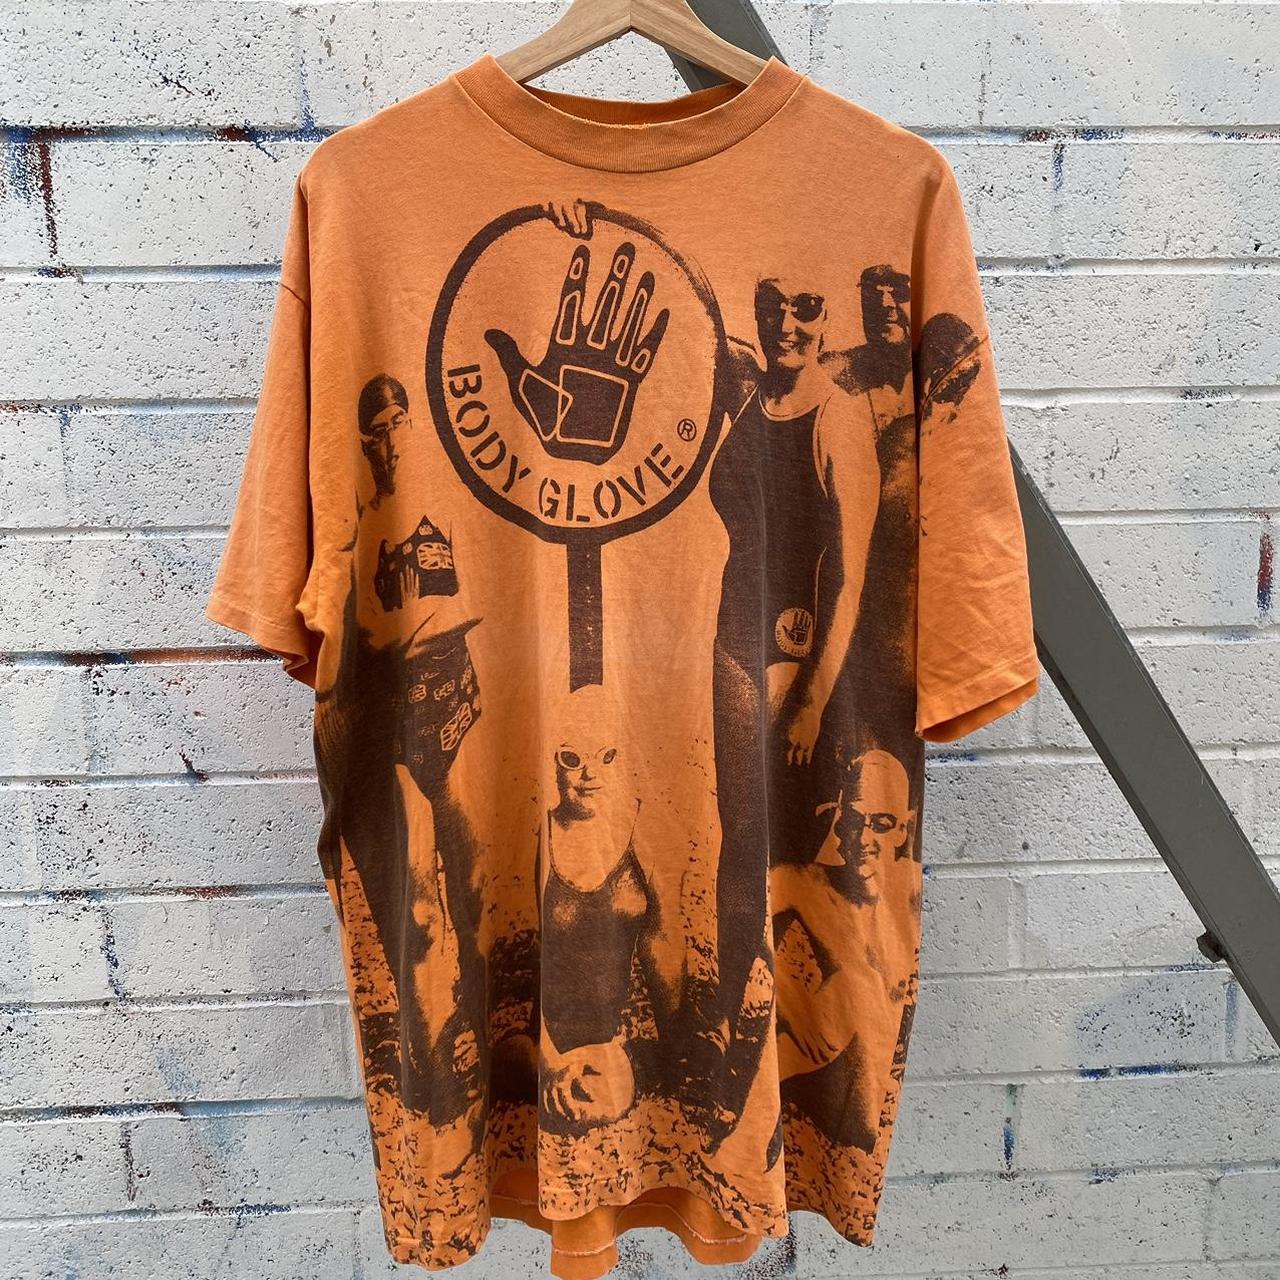 Body Glove Men's Orange T-shirt (2)